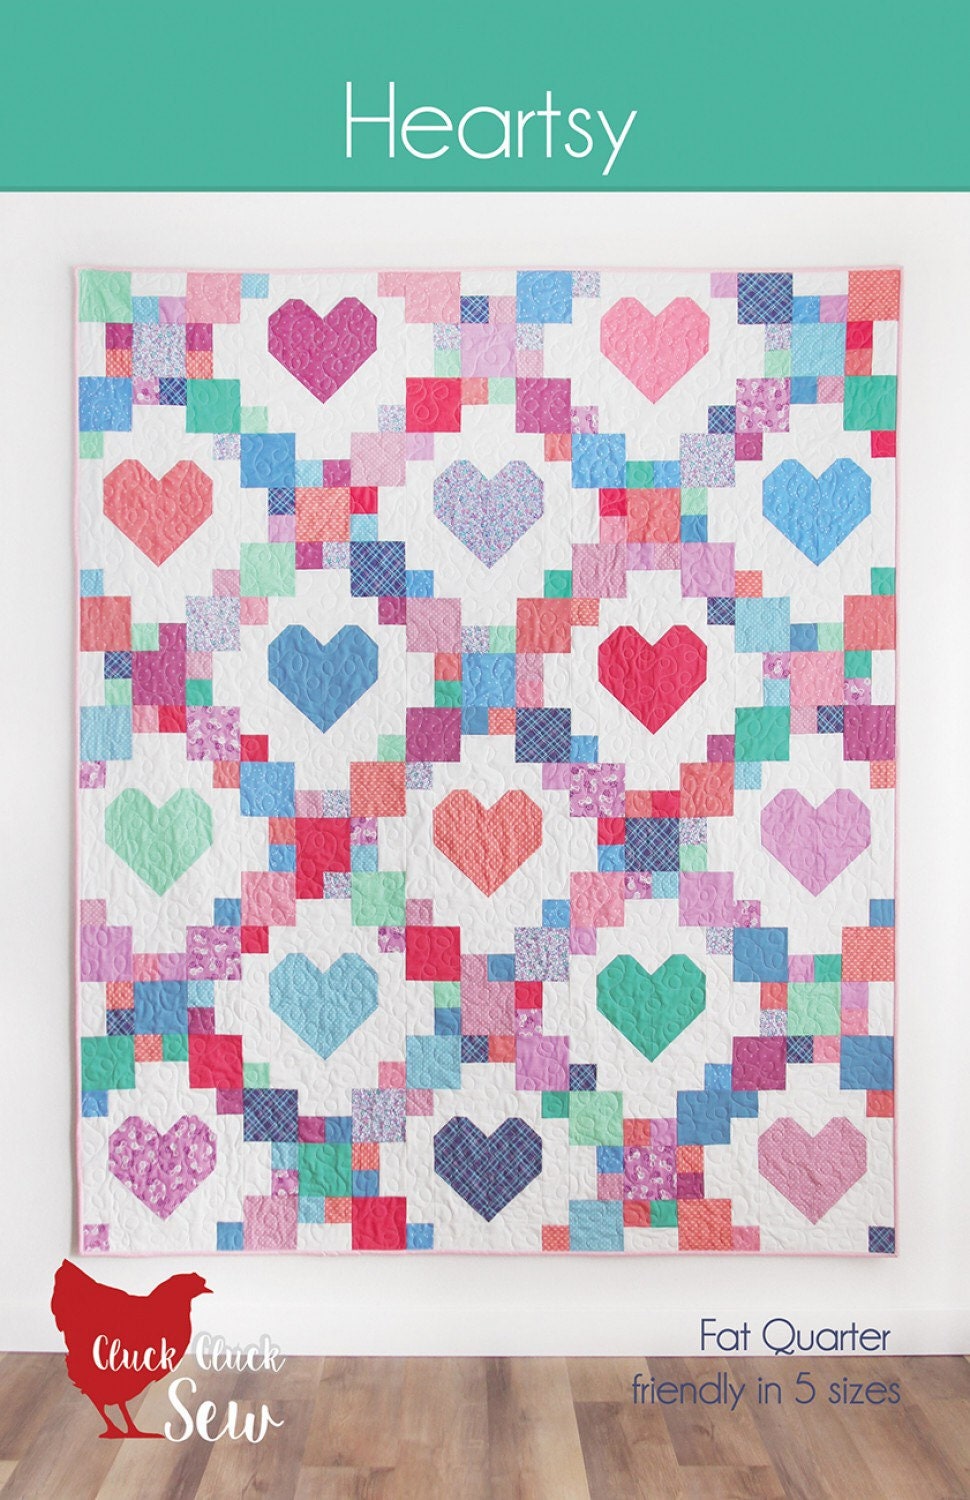 Heartsy Quilt Pattern - Cluck Cluck Sew - Allison Harris - Fat Quarter Friendly - 5 sizes